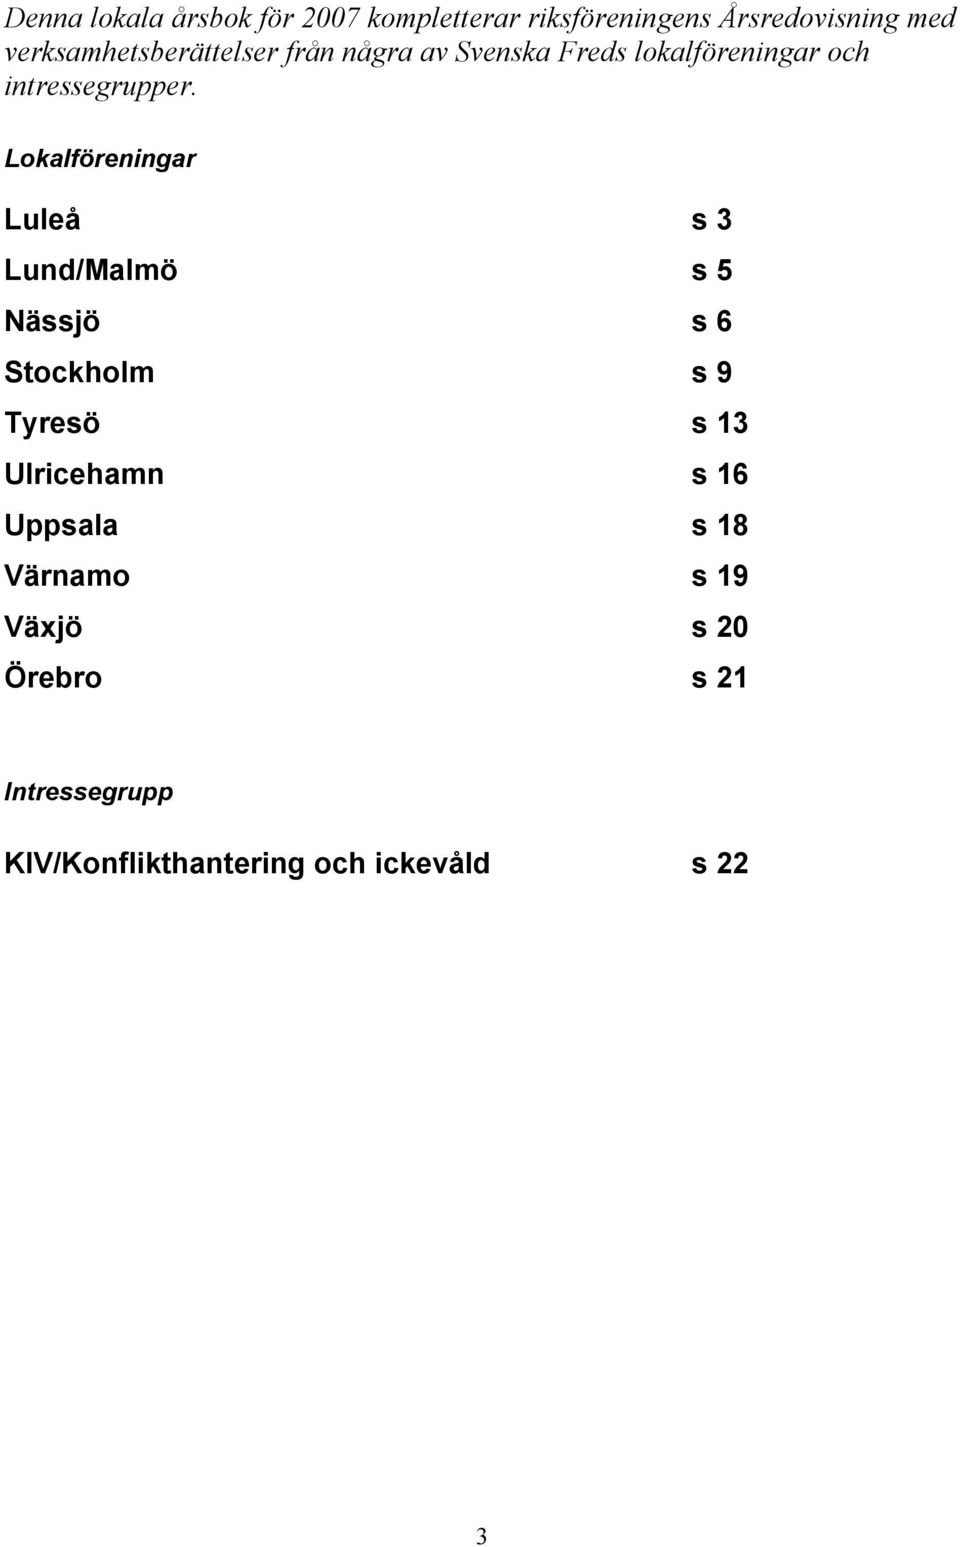 Lokalföreningar Luleå s 3 Lund/Malmö s 5 Nässjö s 6 Stockholm s 9 Tyresö s 13 Ulricehamn s